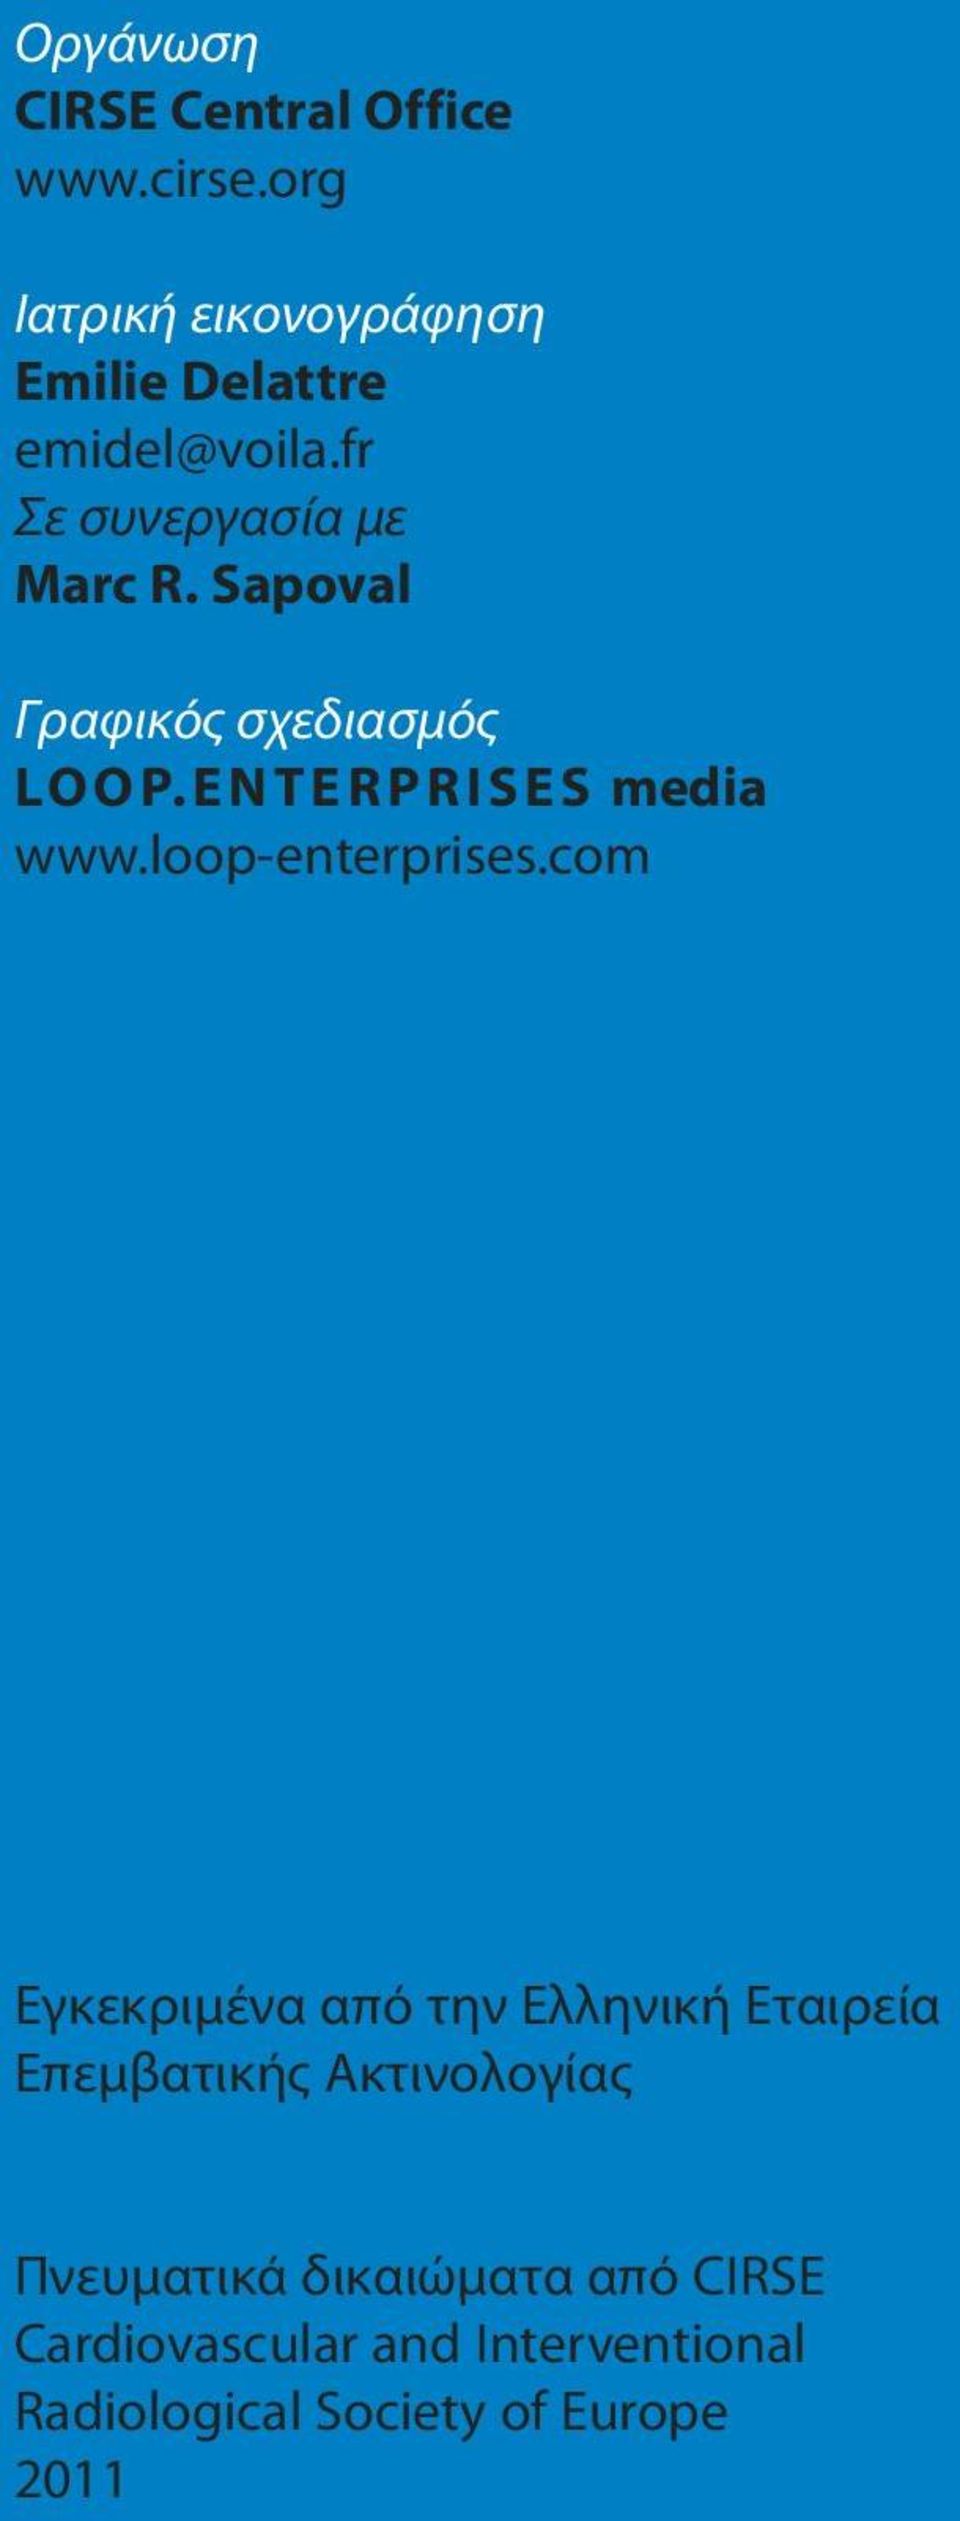 Sapoval Γραφικός σχεδιασμός LOOP. ENTERPRISES media www.loop-enterprises.